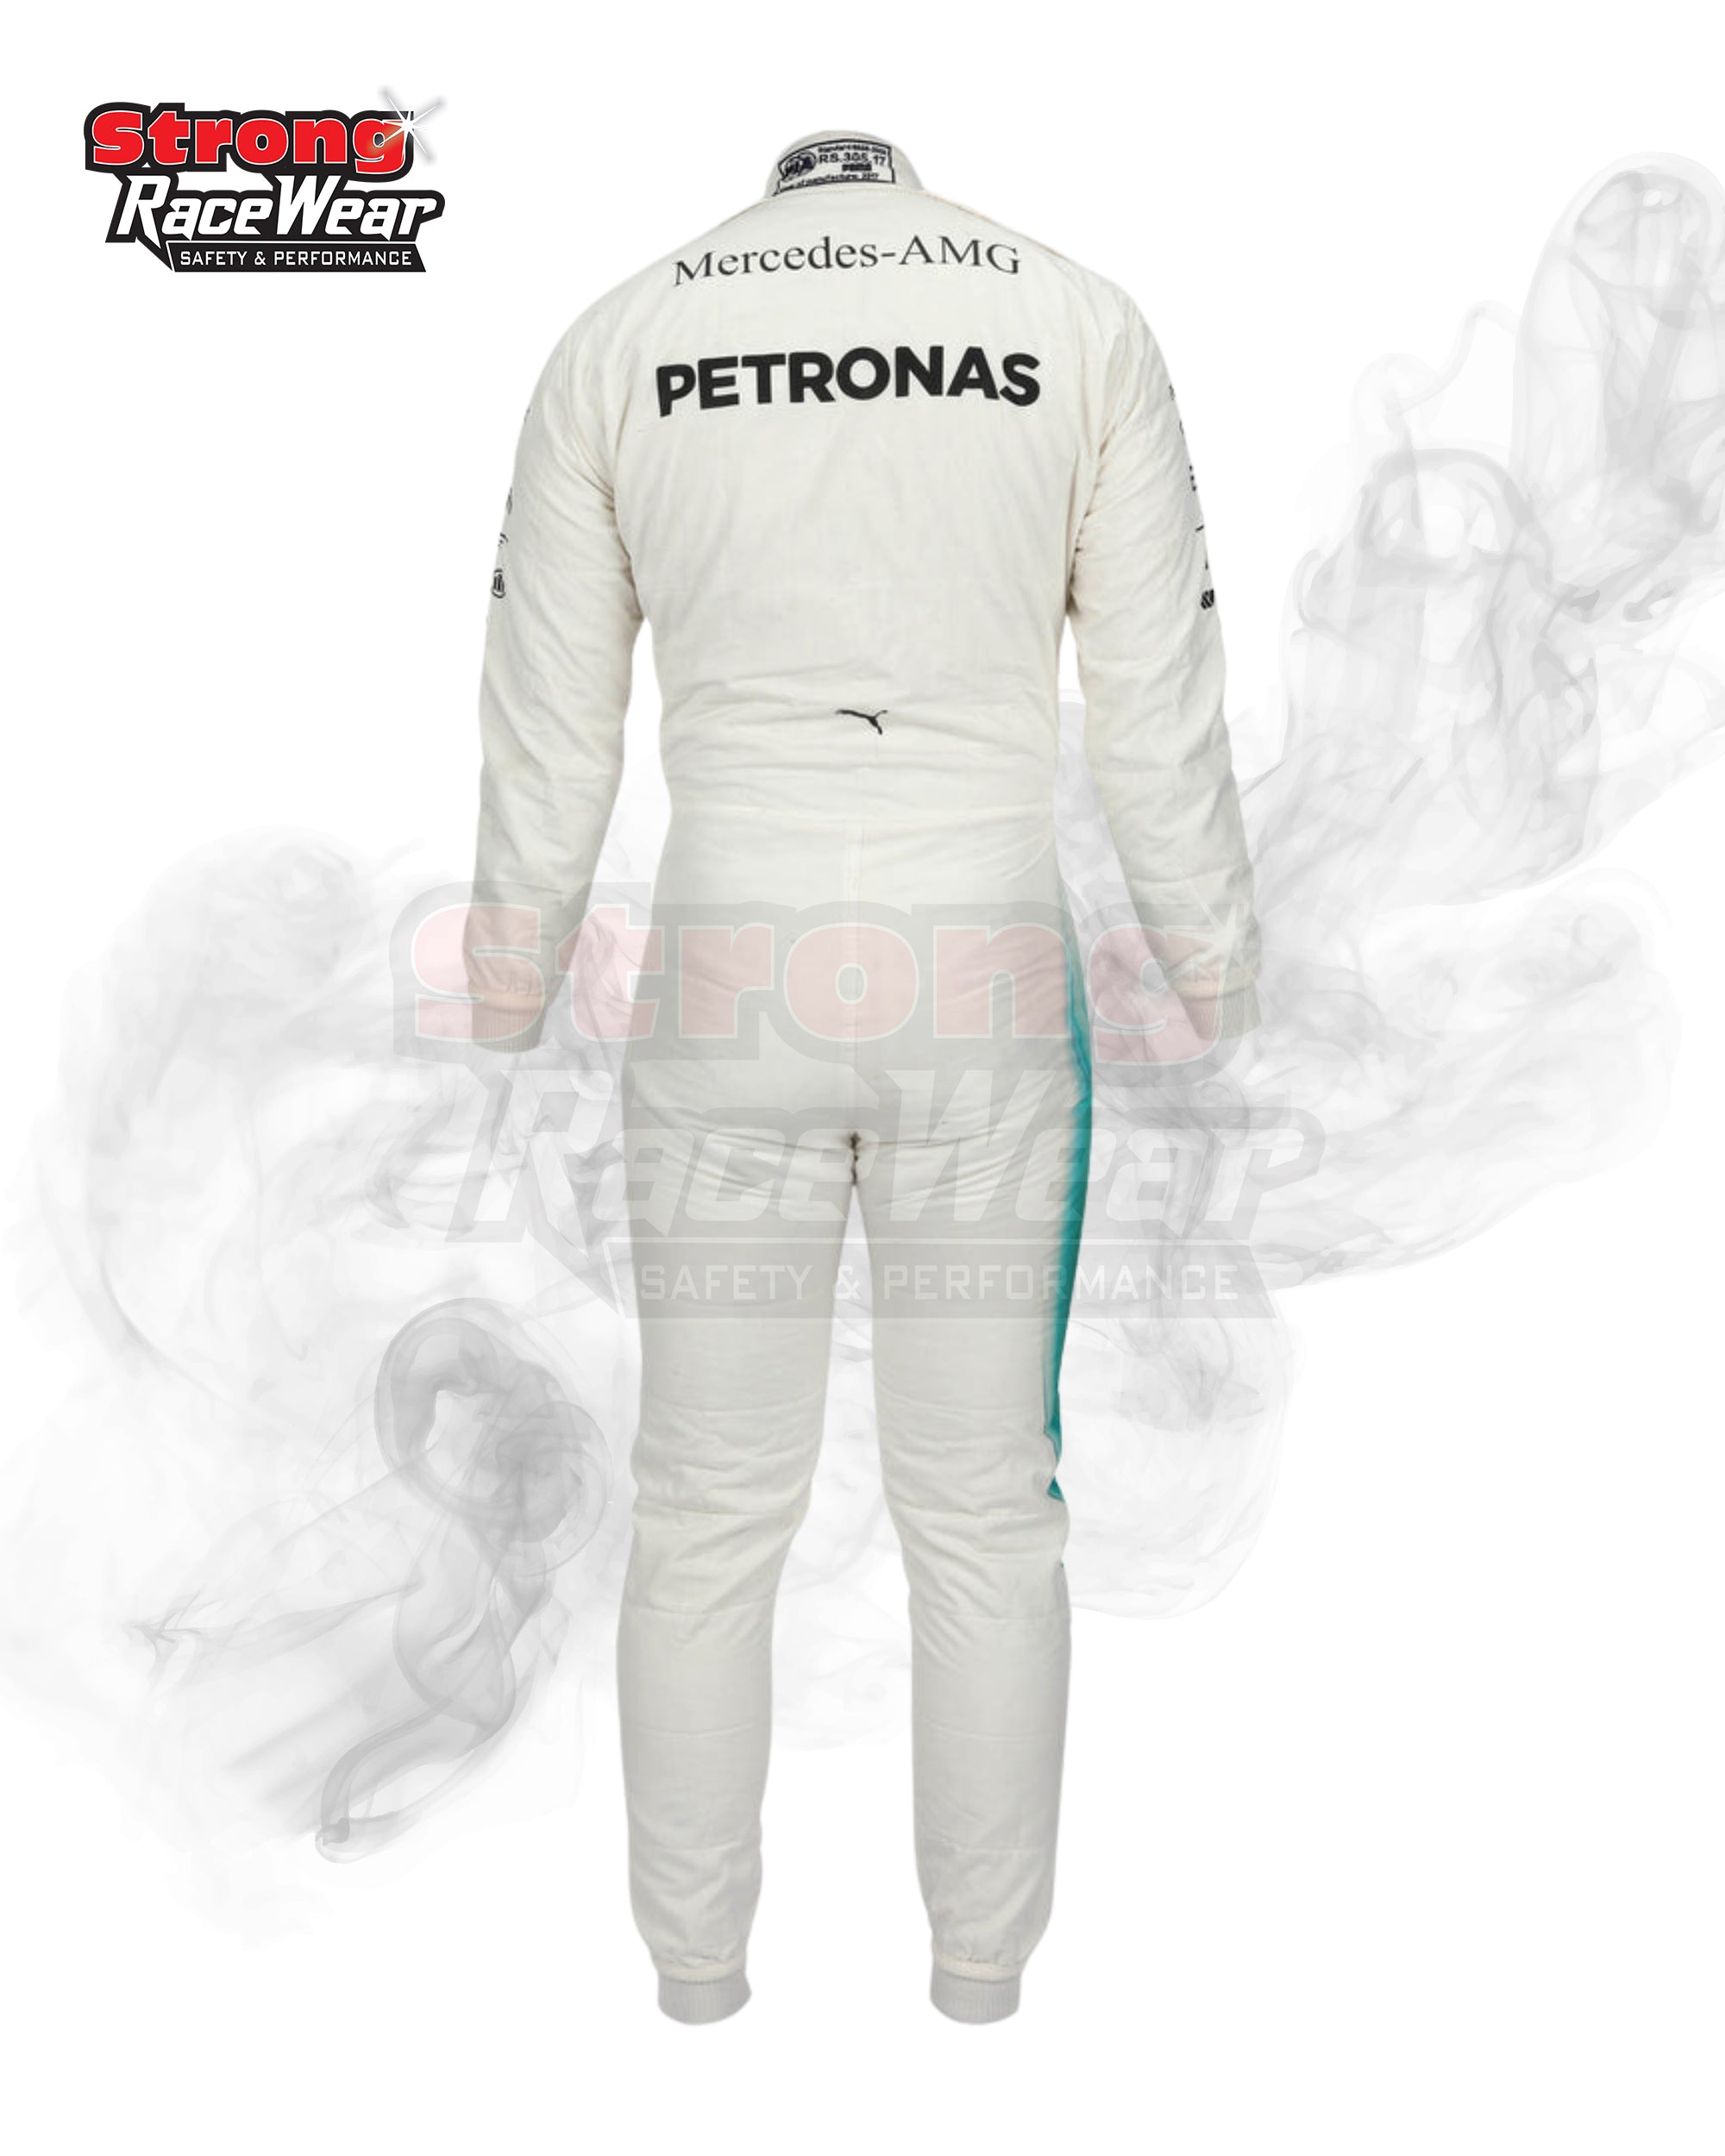 Vallteri Bottas Un-signed 2017 Mercedes-AMG Petronas Race Suit